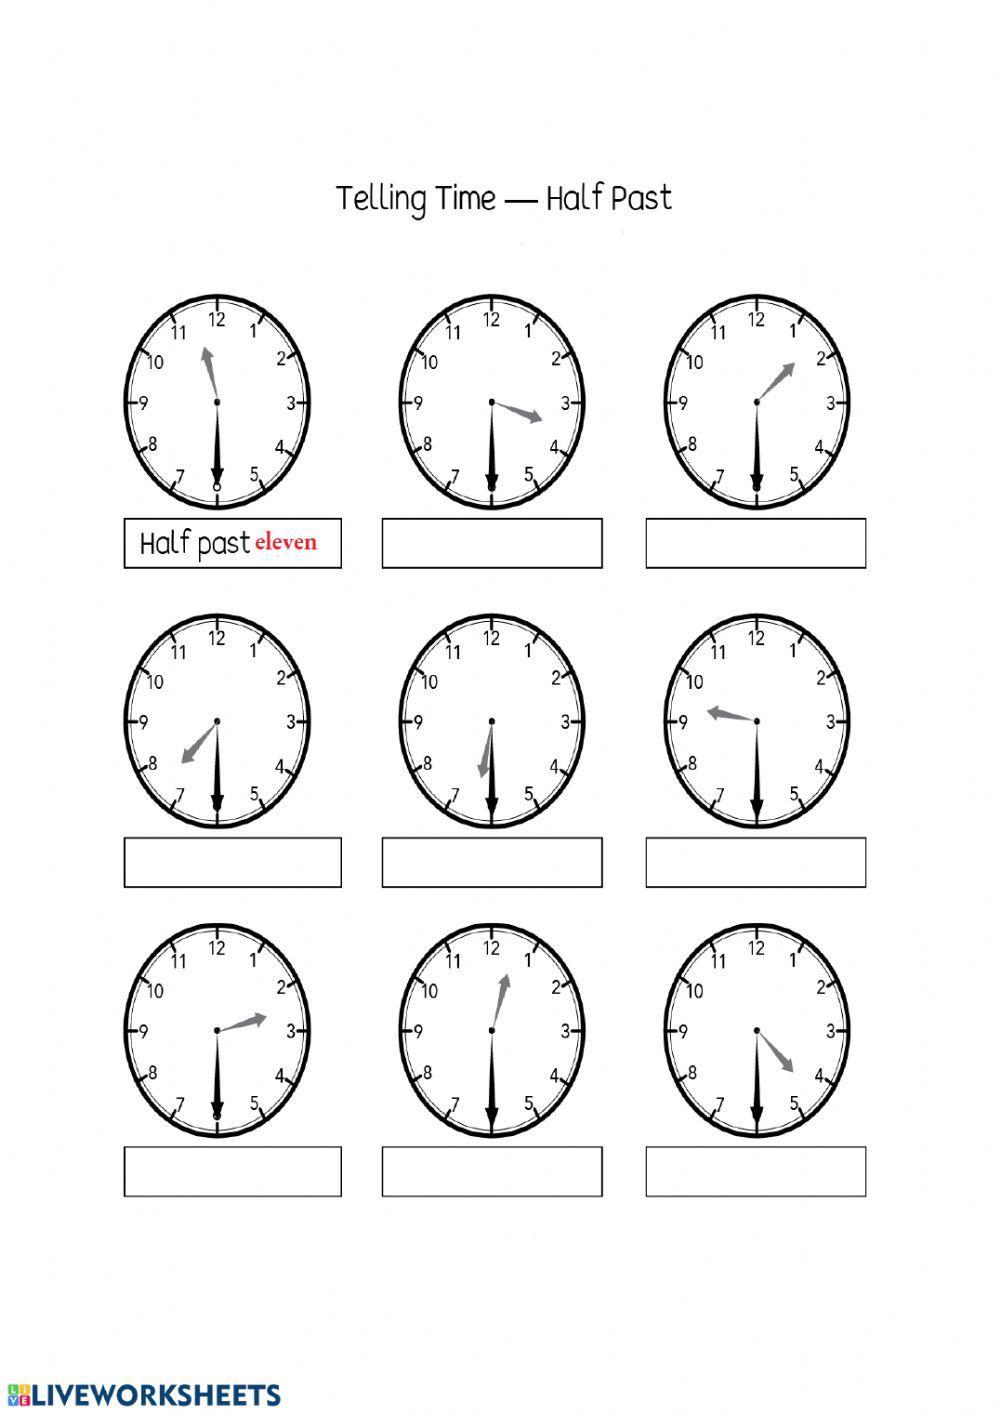 Time: half past